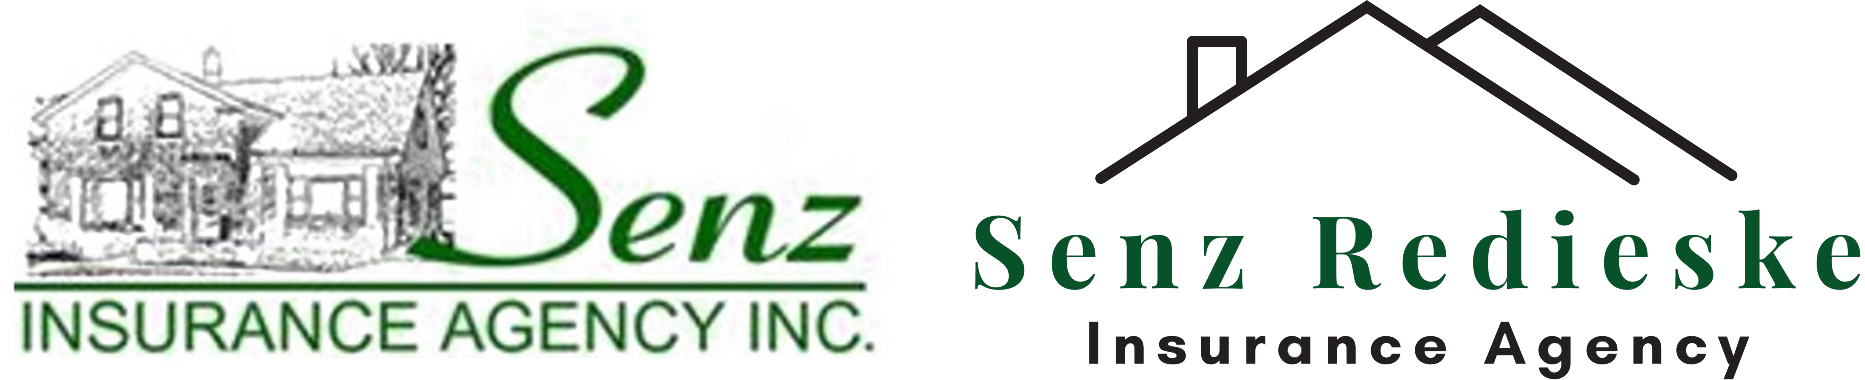 Senz Insurance Agency, Inc.